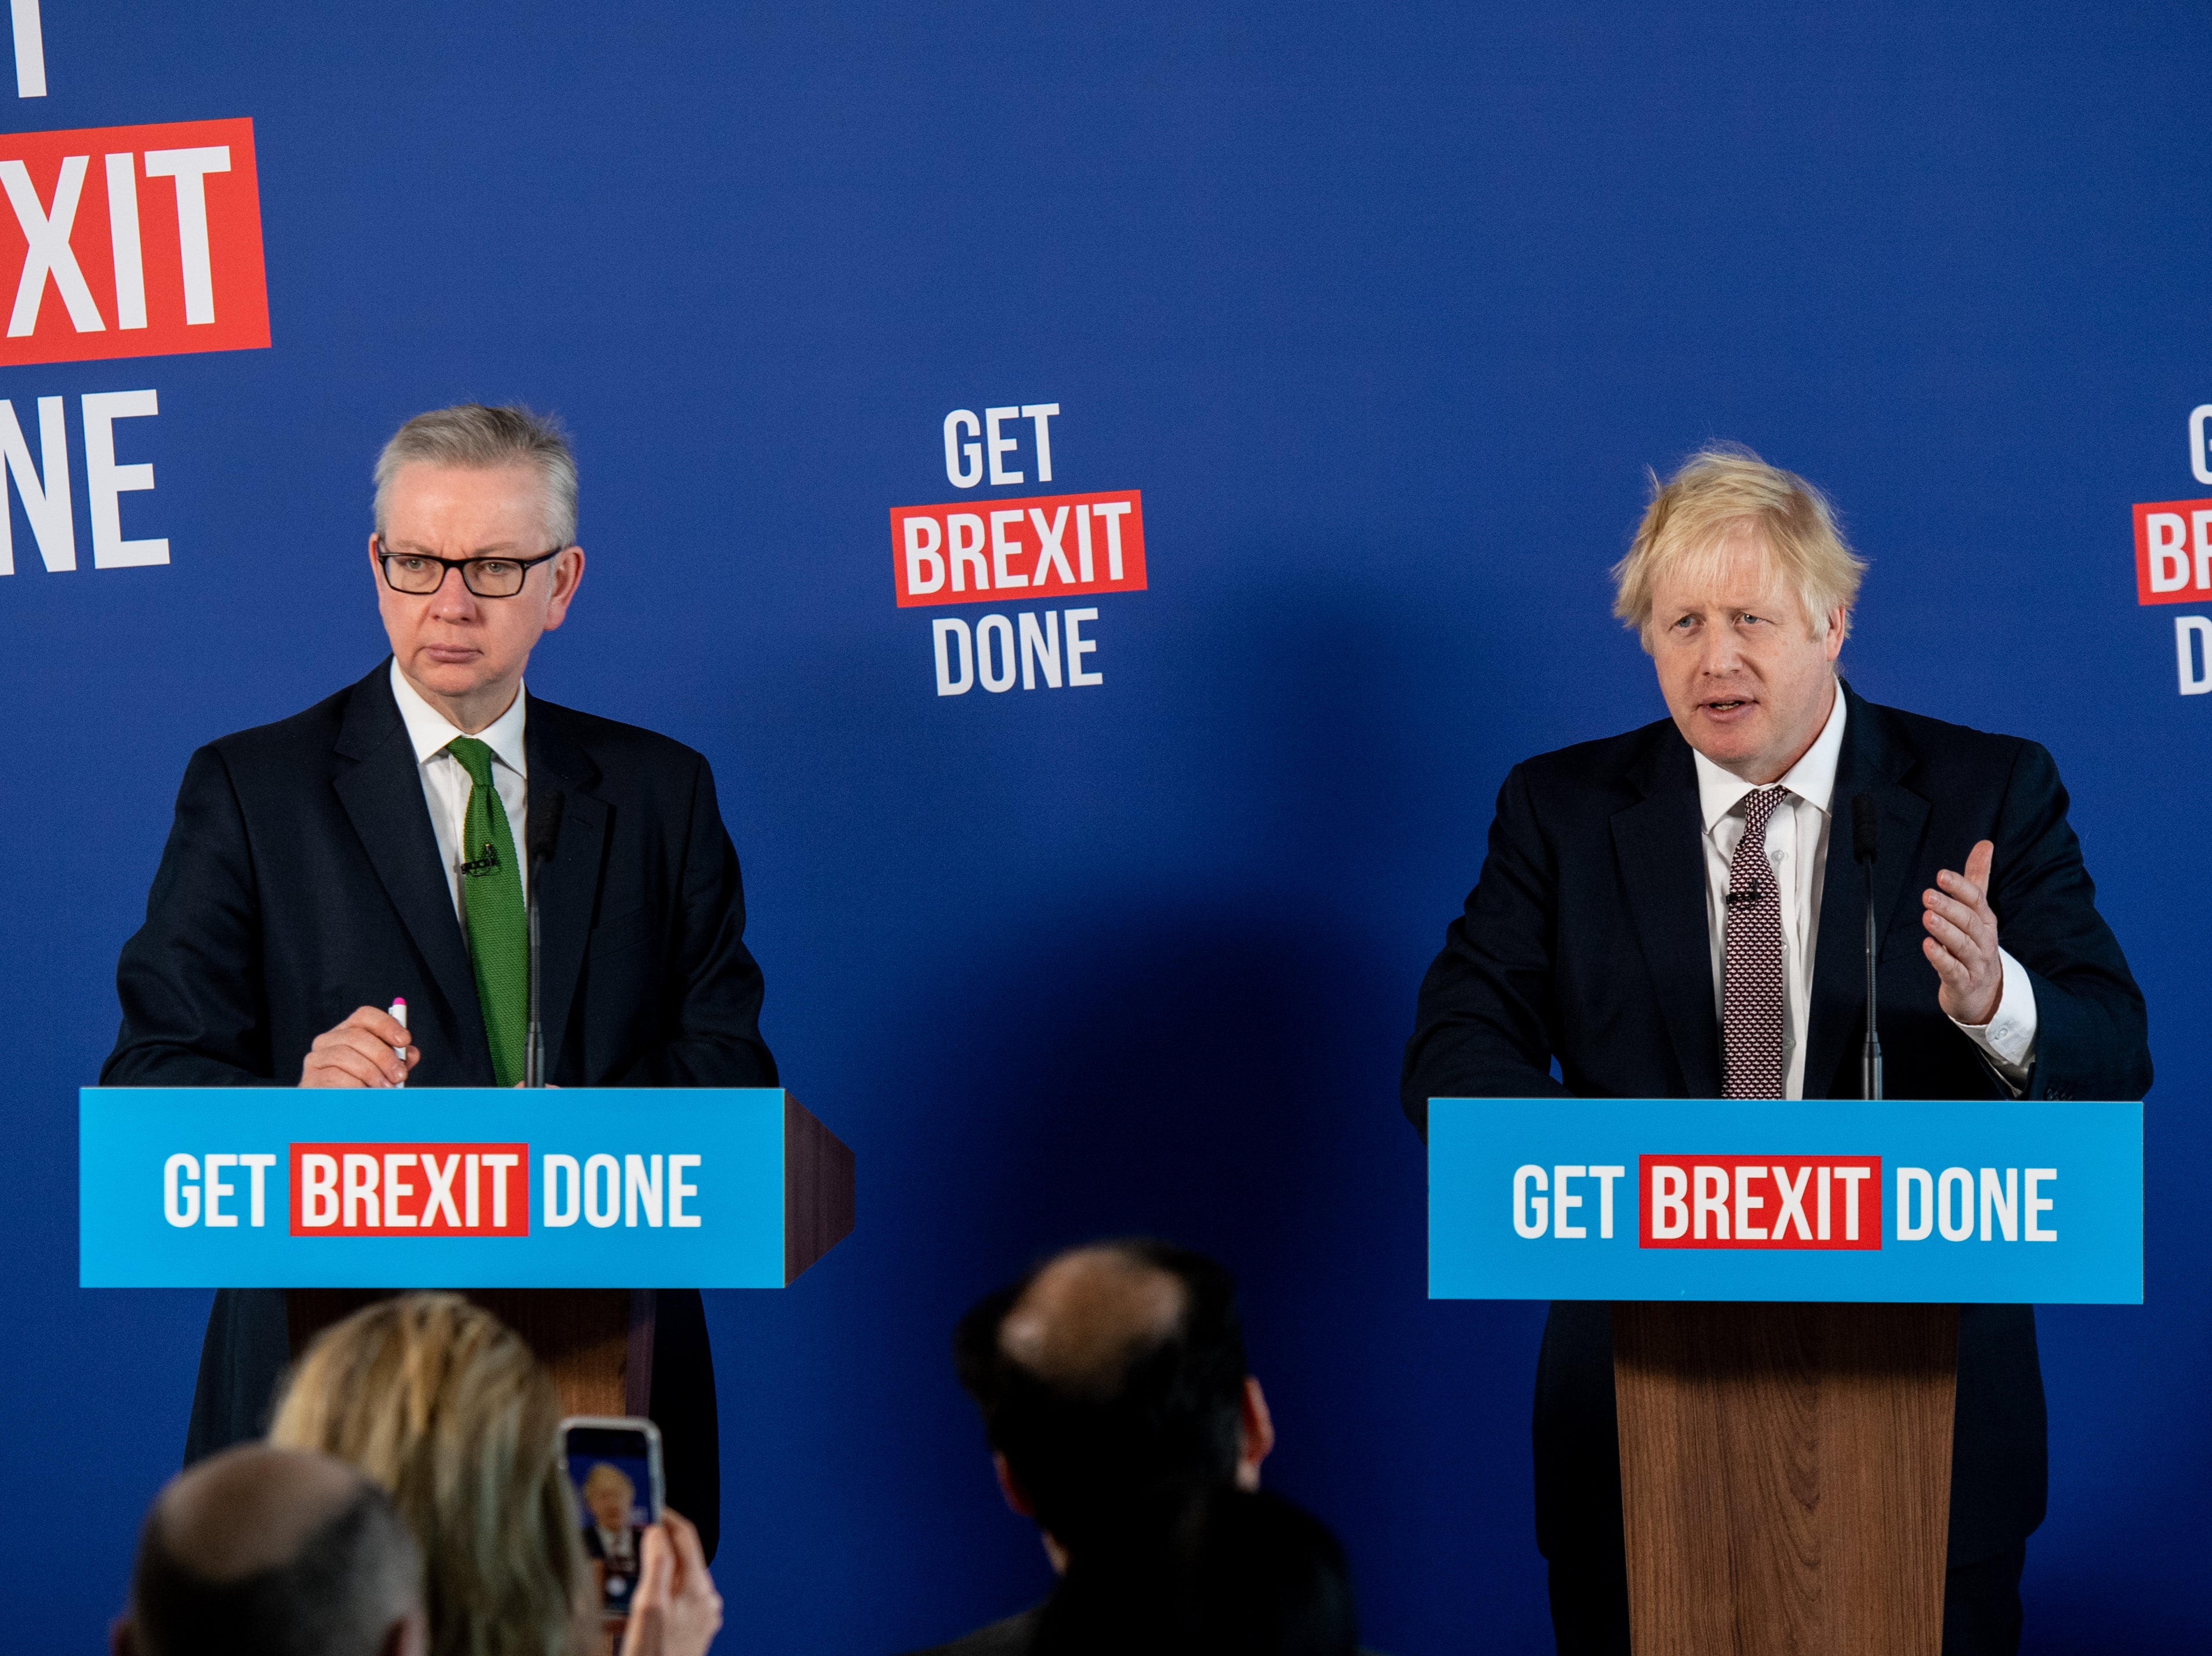 Boris Johnson and Michael Gove were allies over Brexit